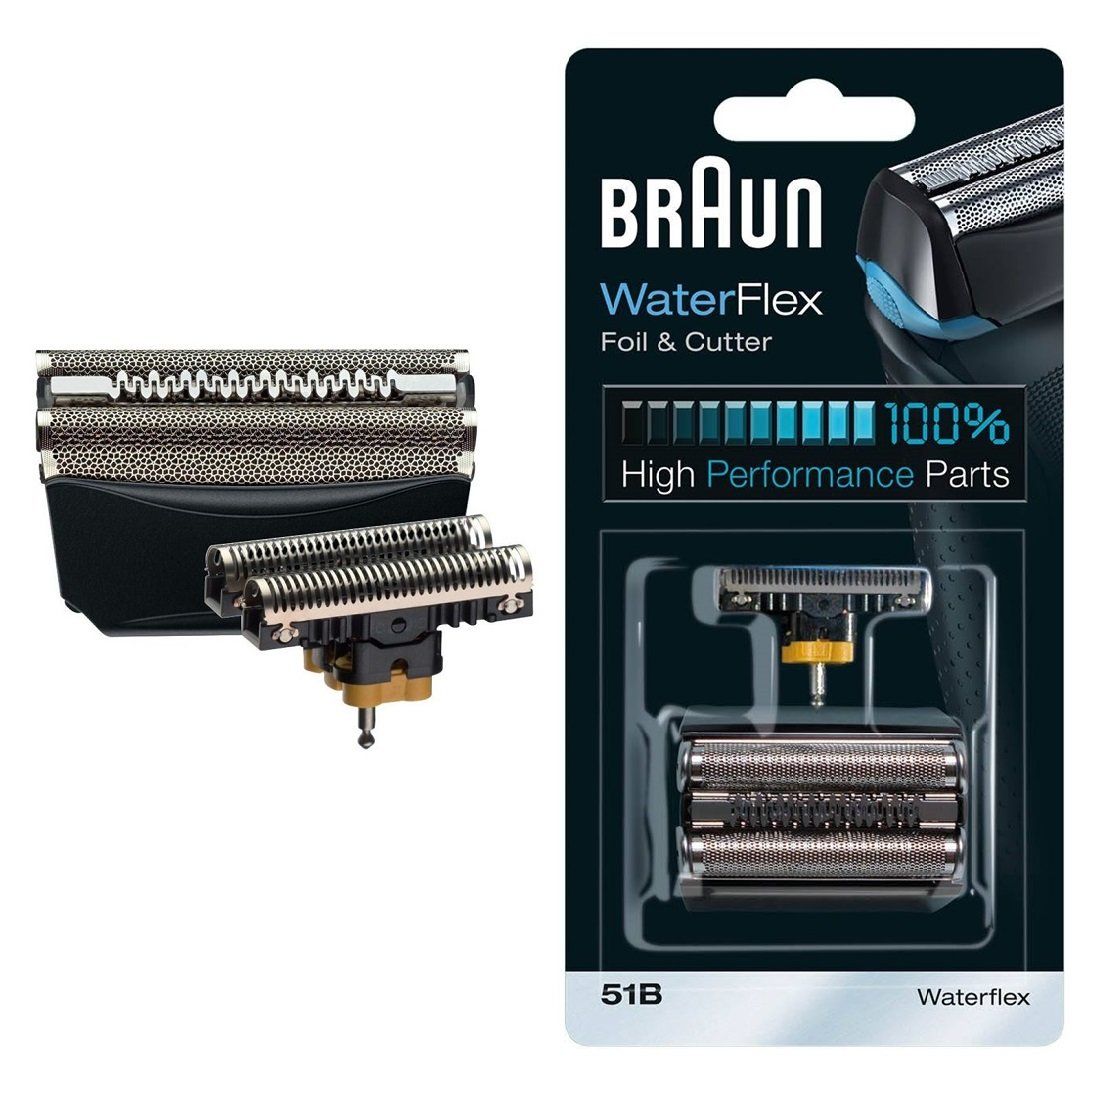 Купить сетку для браун 5. Браун 51b сетка для бритвы. Режущий блок бритвы Braun 5605. Сетка и режущий блок Braun 51s [для WATERFLEX] - CN. Режущий блок и сетка Браун 30в 4000/7000.